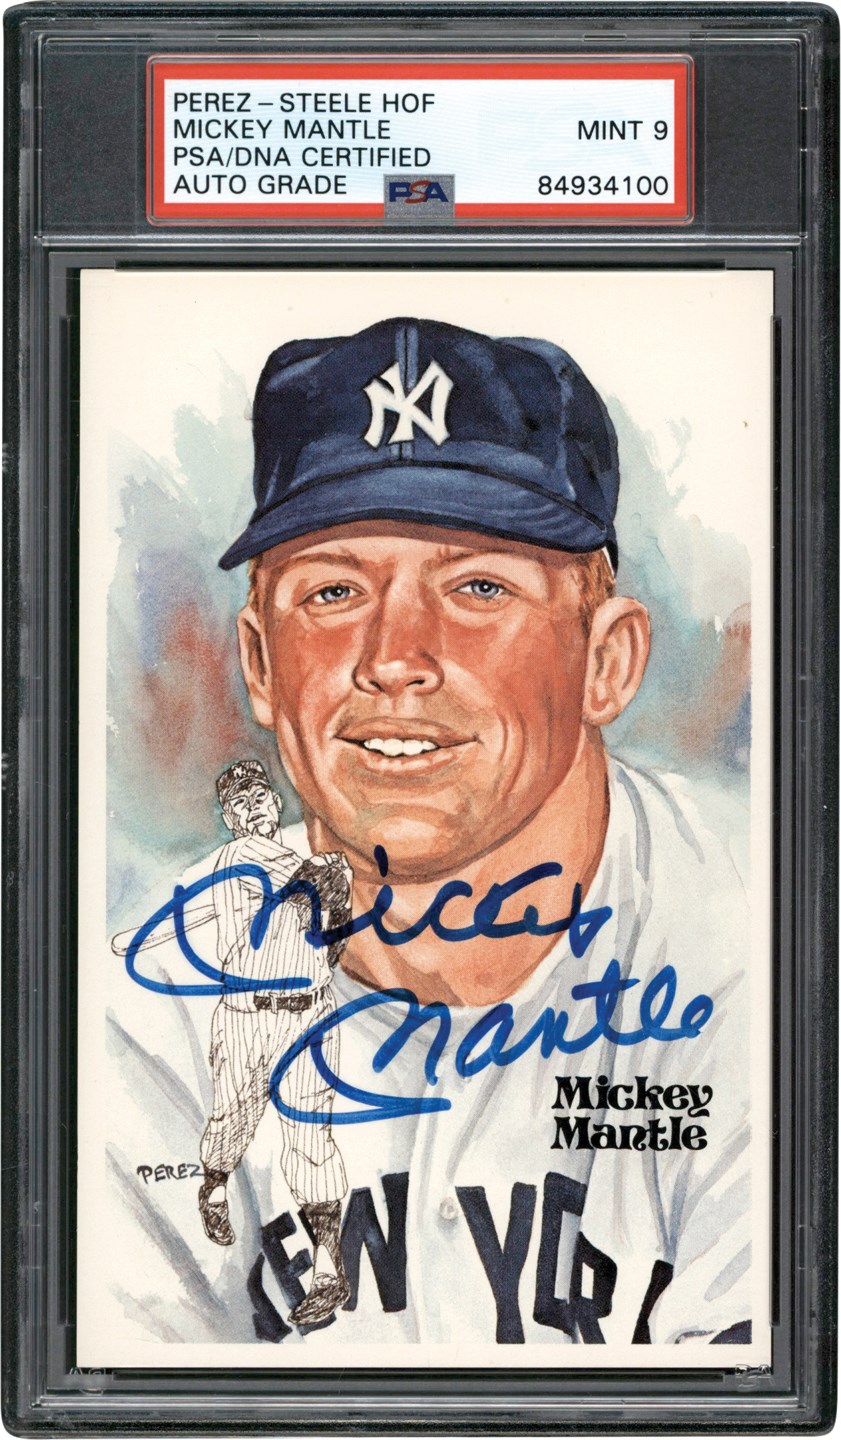 Baseball Autographs - Mickey Mantle Signed Perez Steele HOF Postcard (PSA)